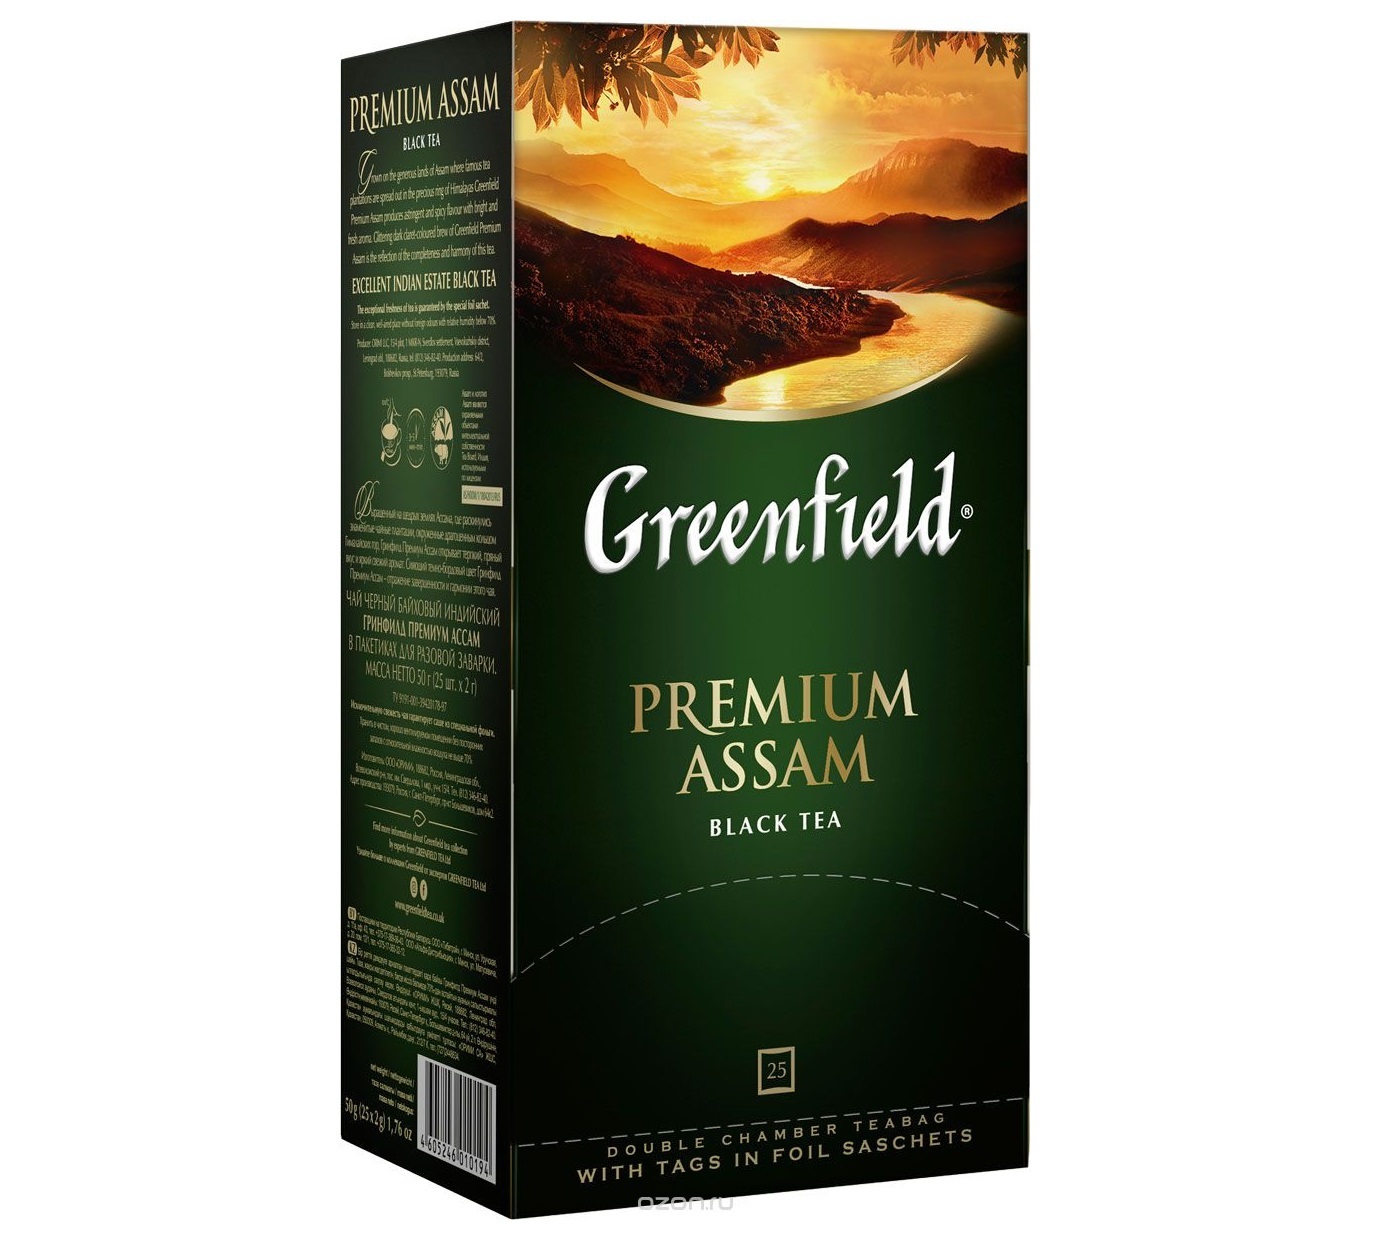 Greenfield Premium Assam